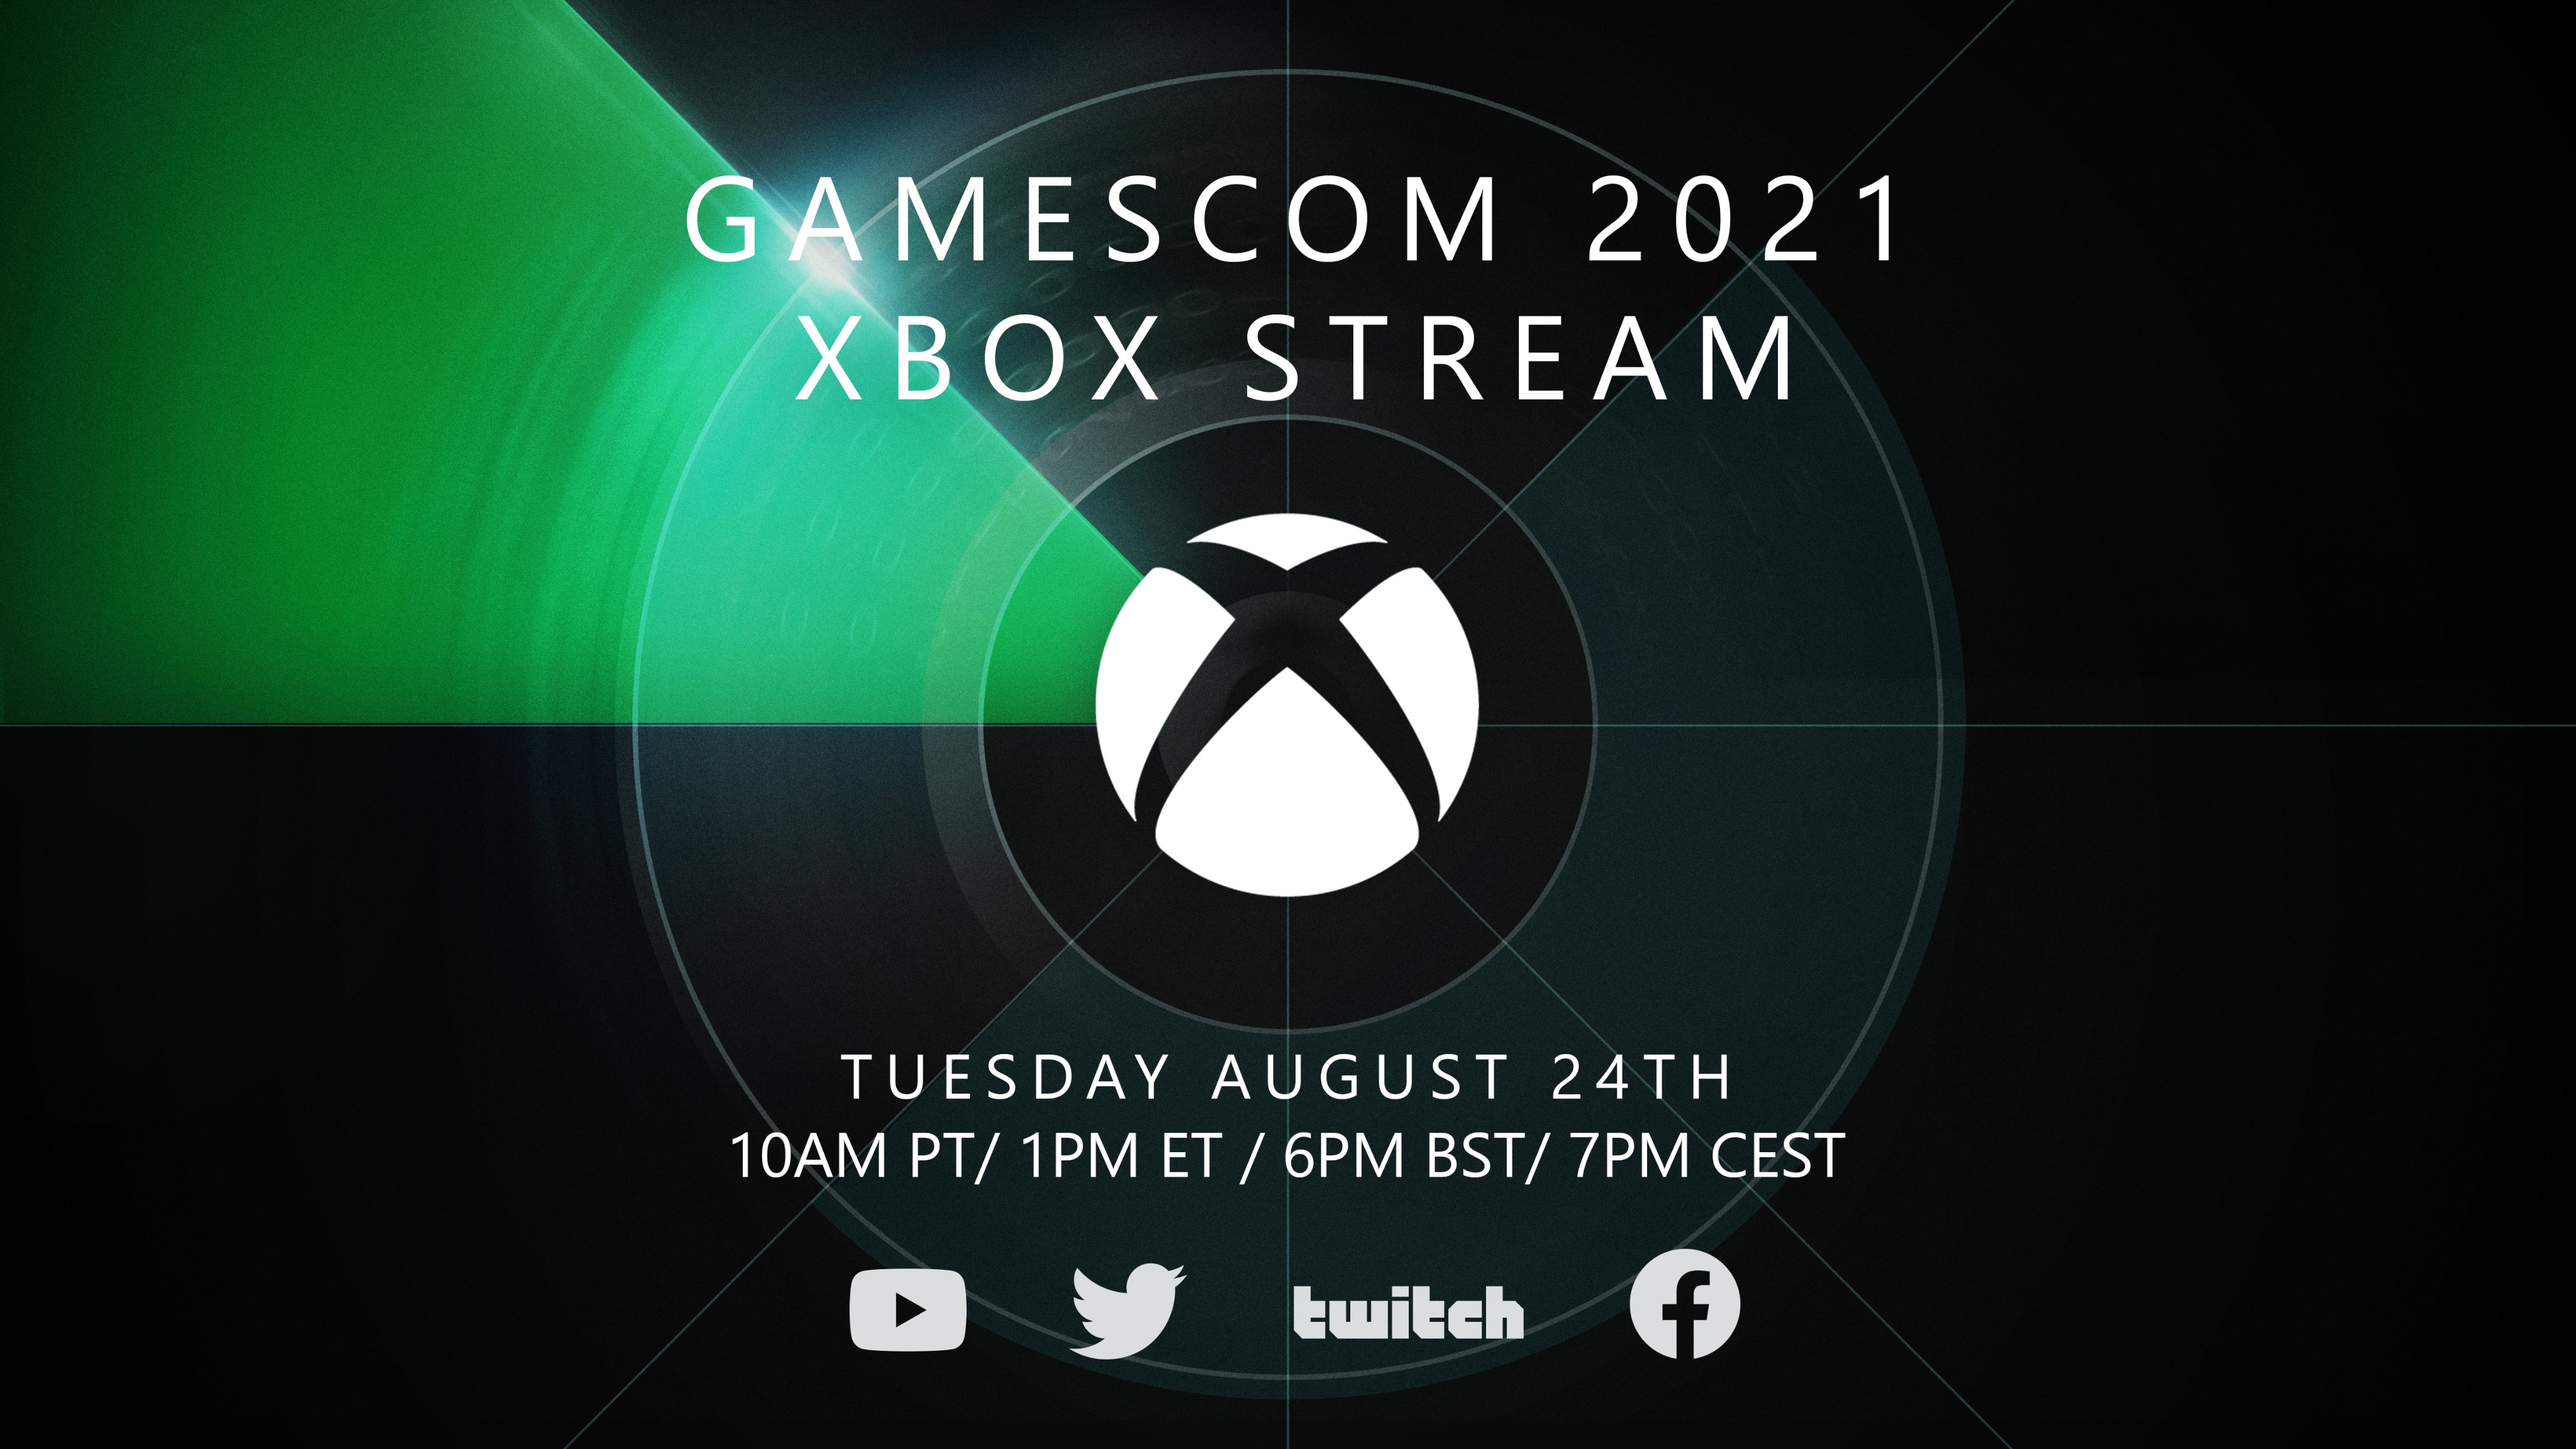 Xbox stream announcement